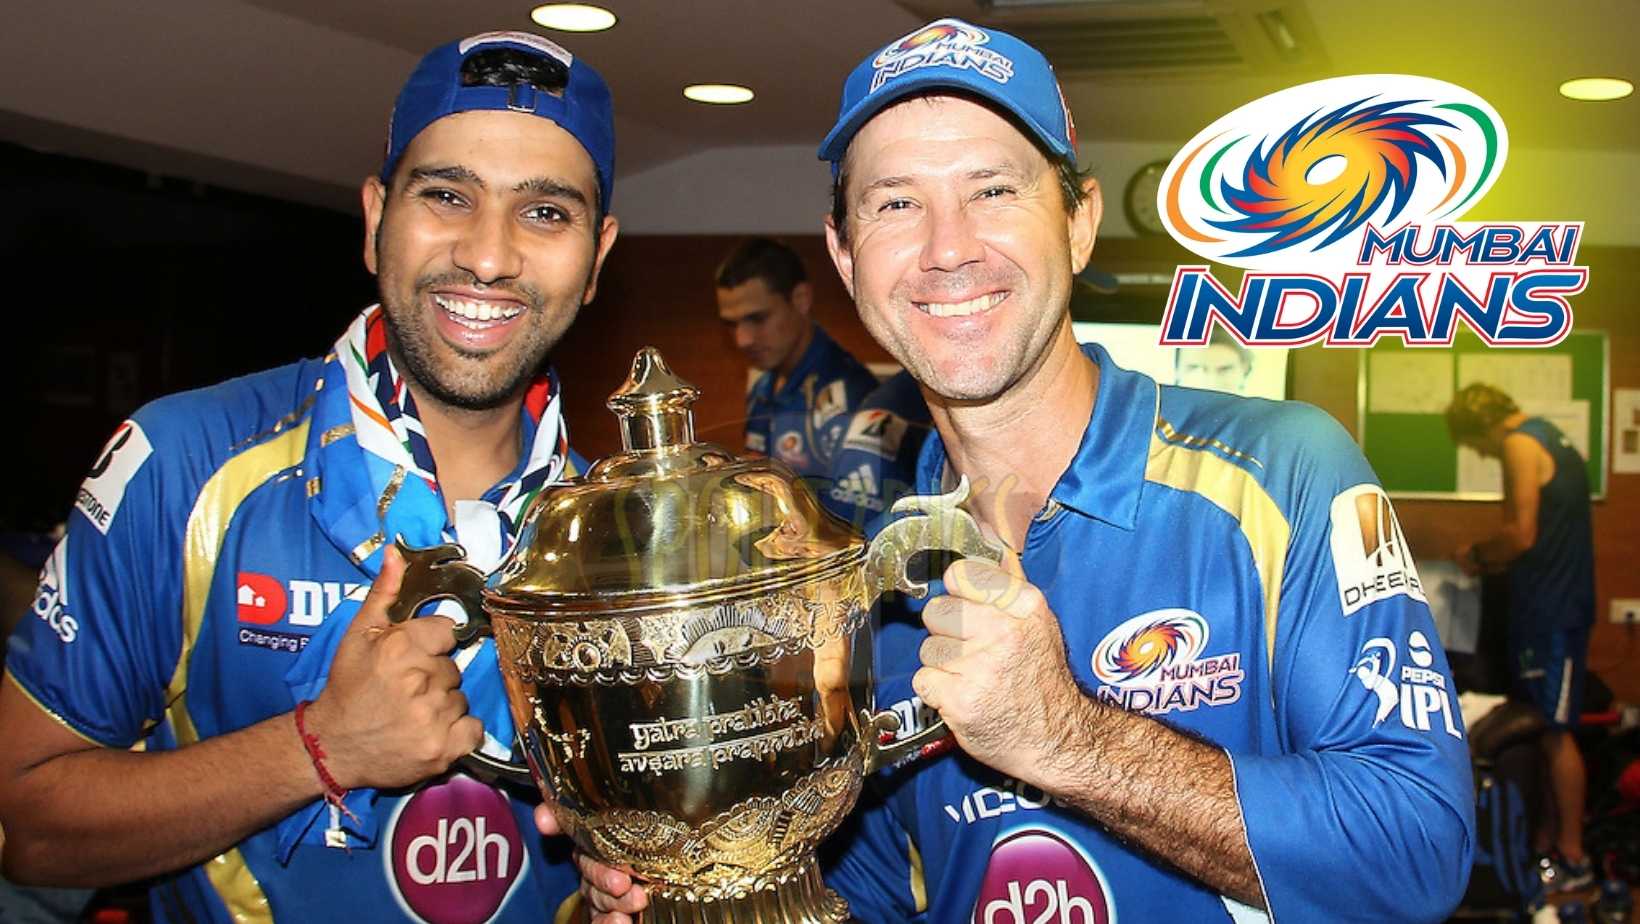 Mumbai Indians- Five Time IPL Winning Team